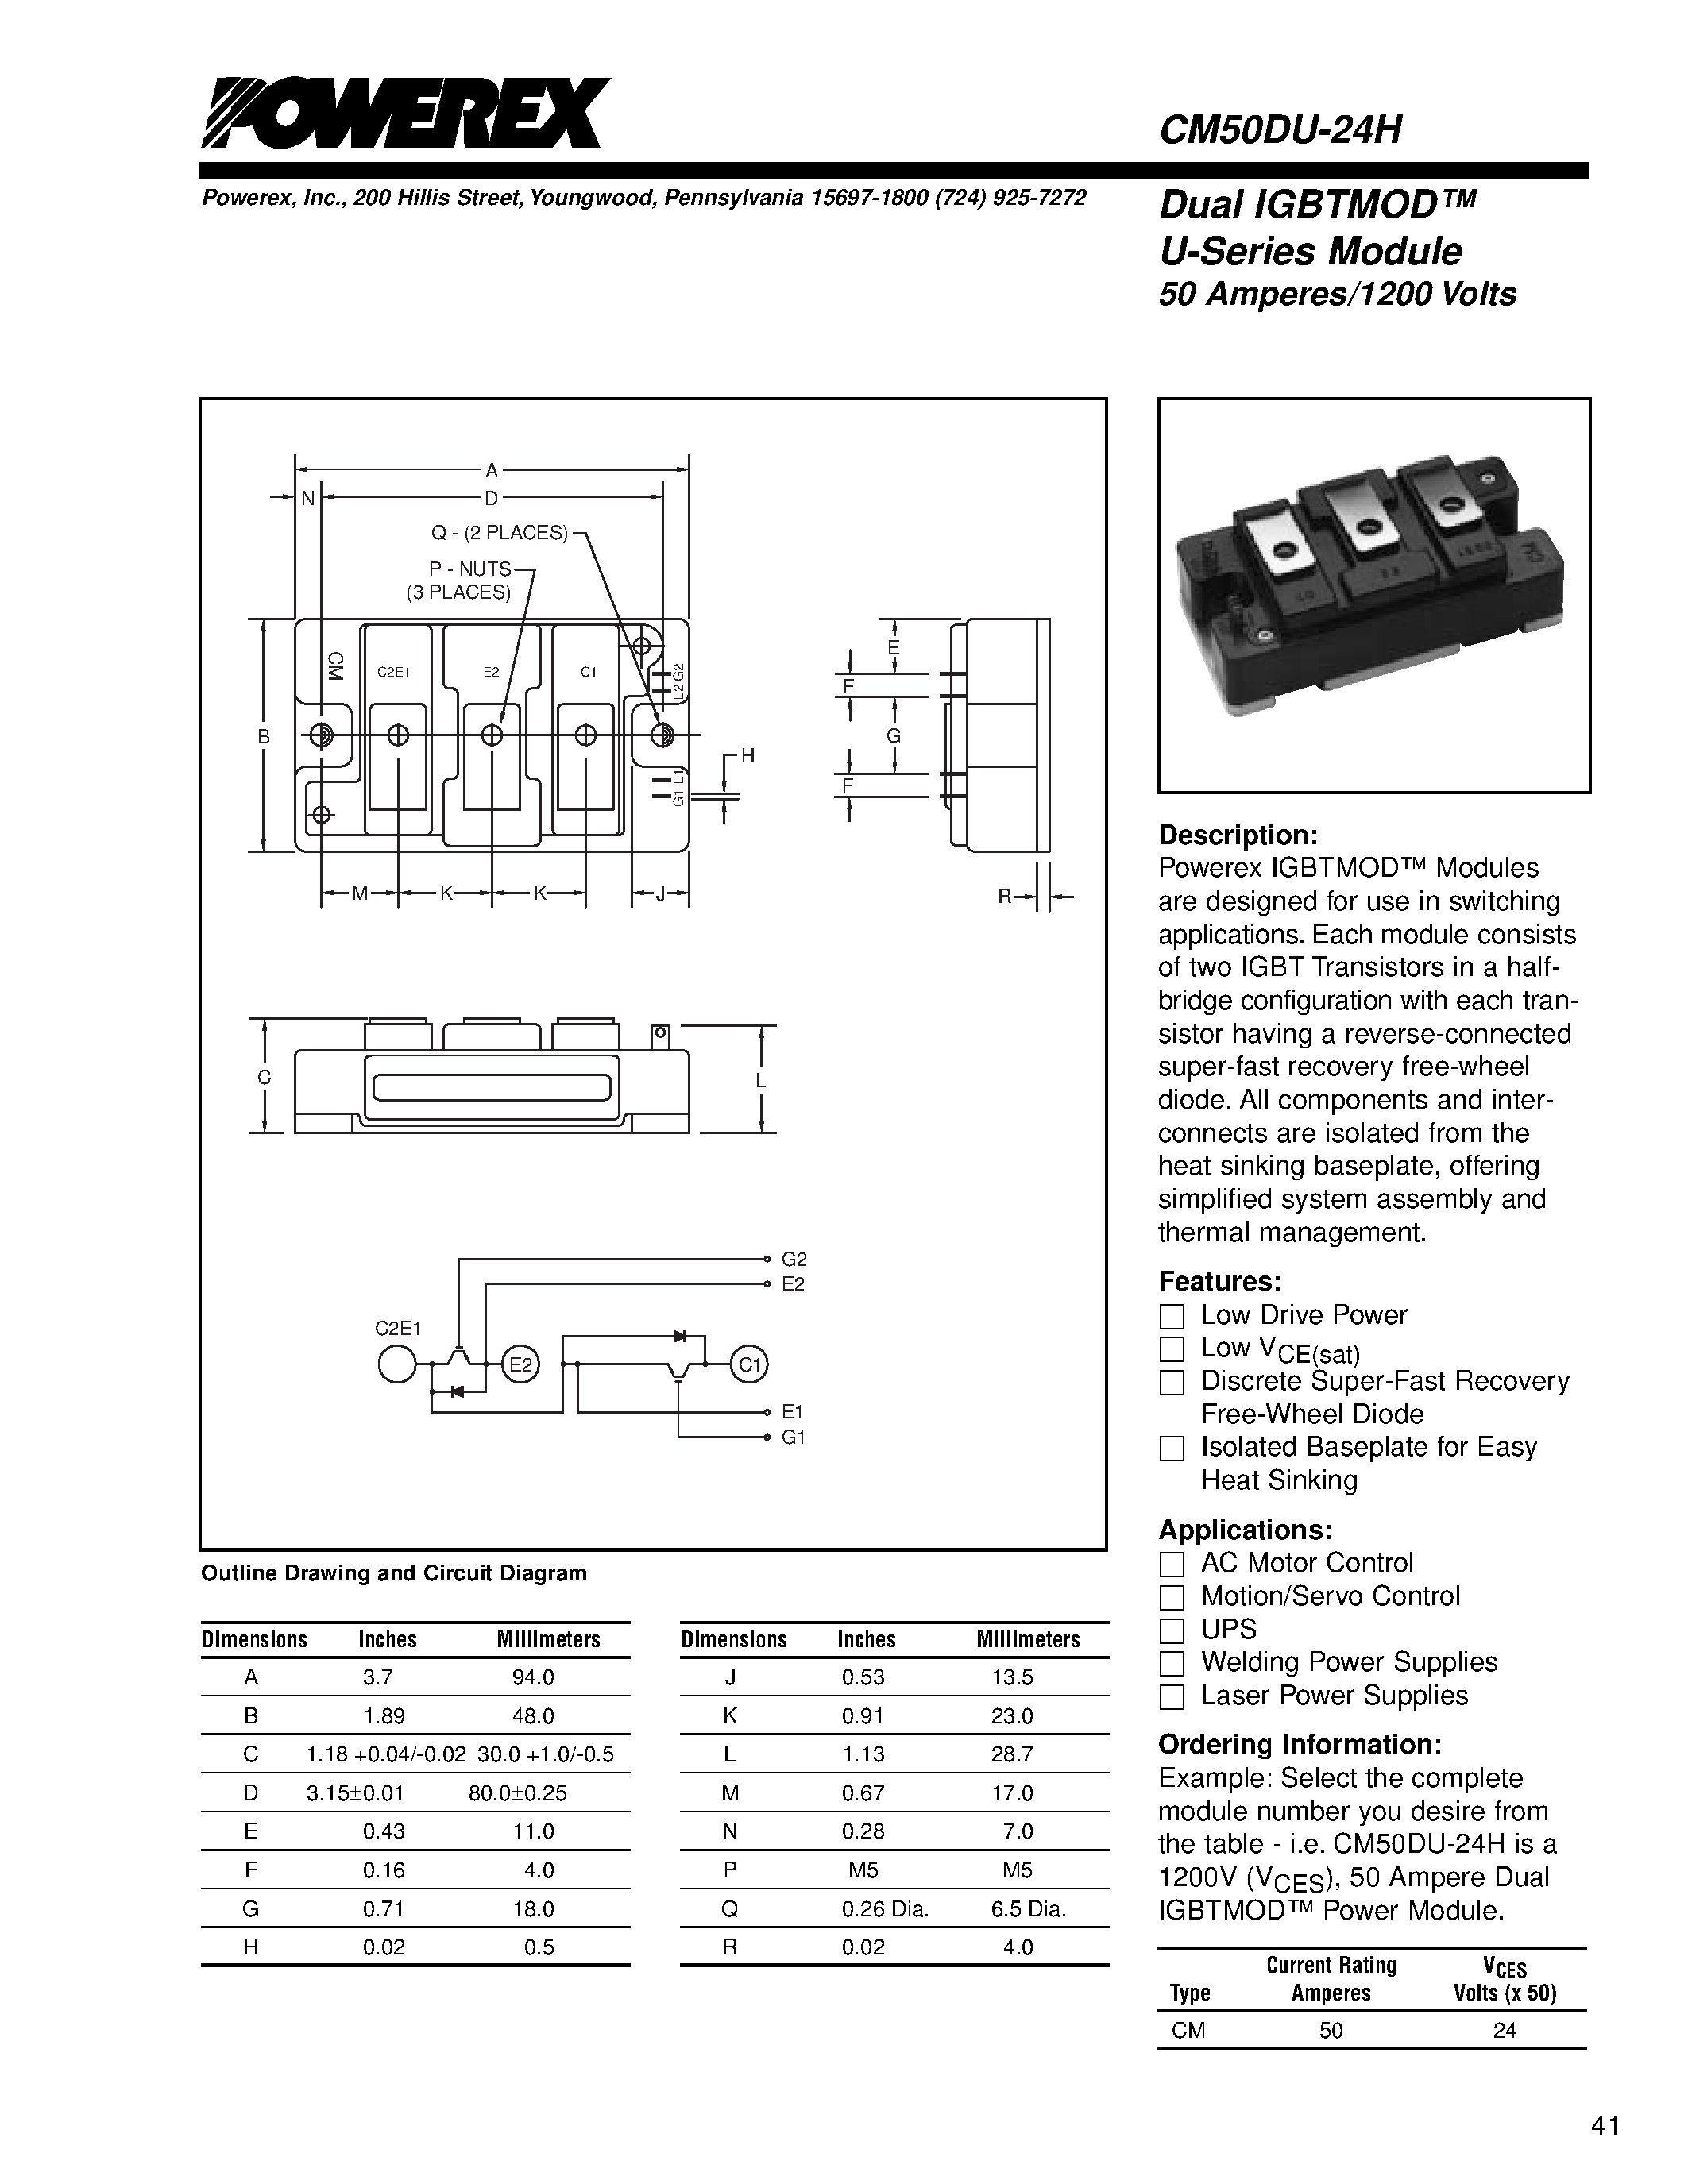 Datasheet CM50DU-24H - Dual IGBTMOD U-Series Module 50 Amperes/1200 Volts page 1